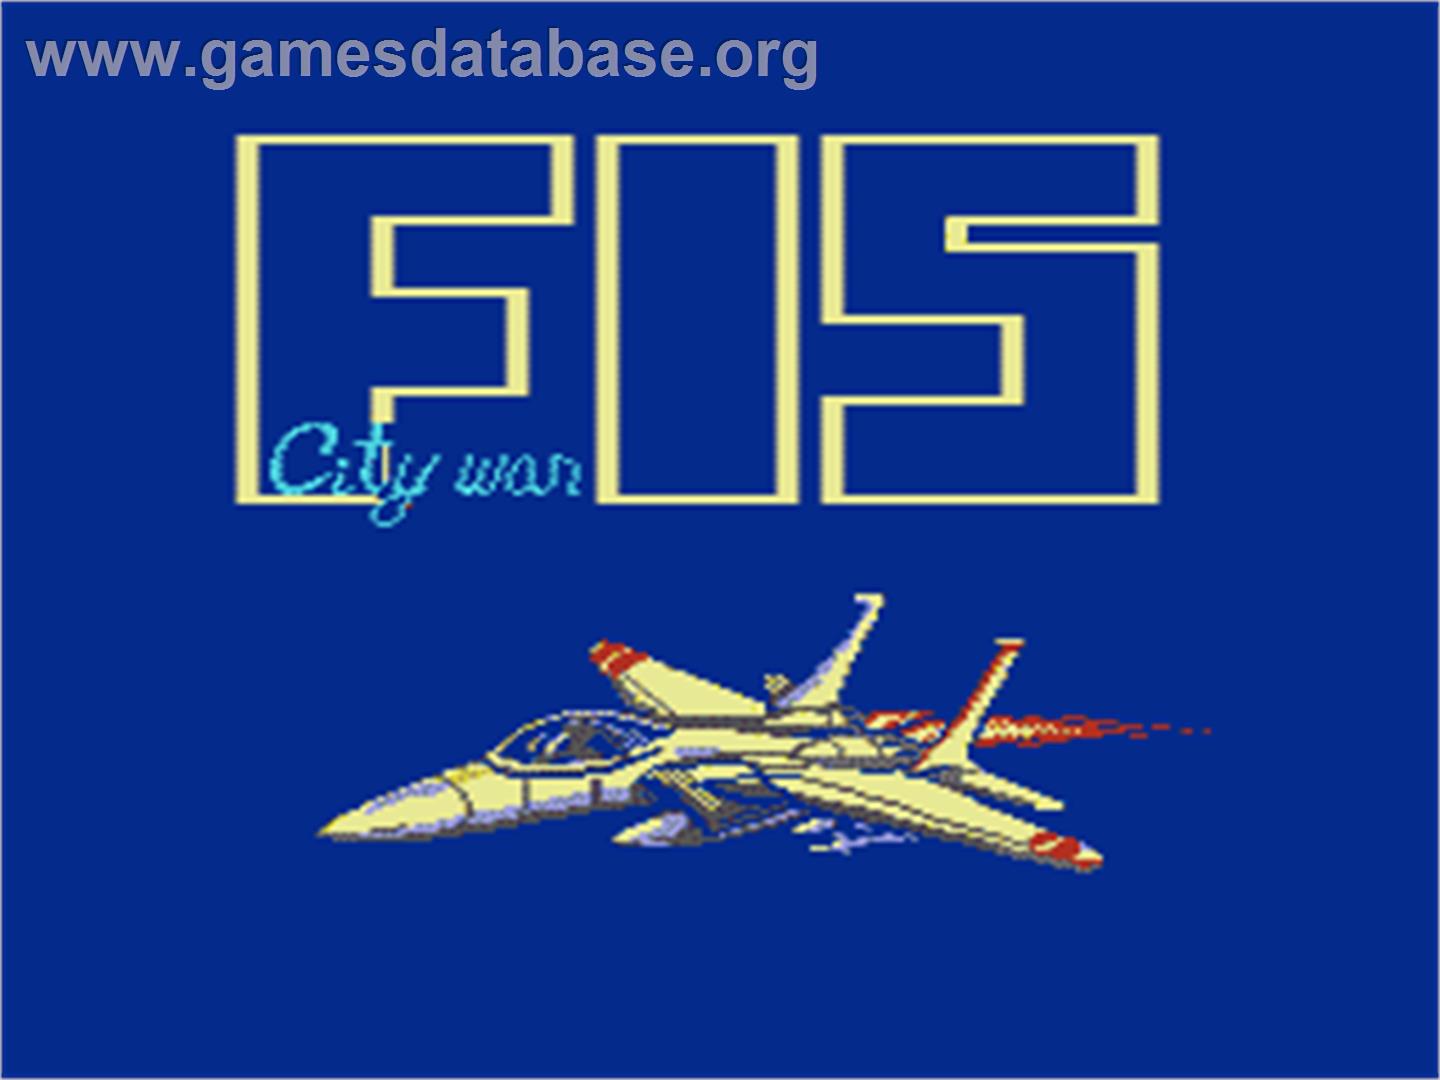 F-15 City War - Nintendo NES - Artwork - Title Screen